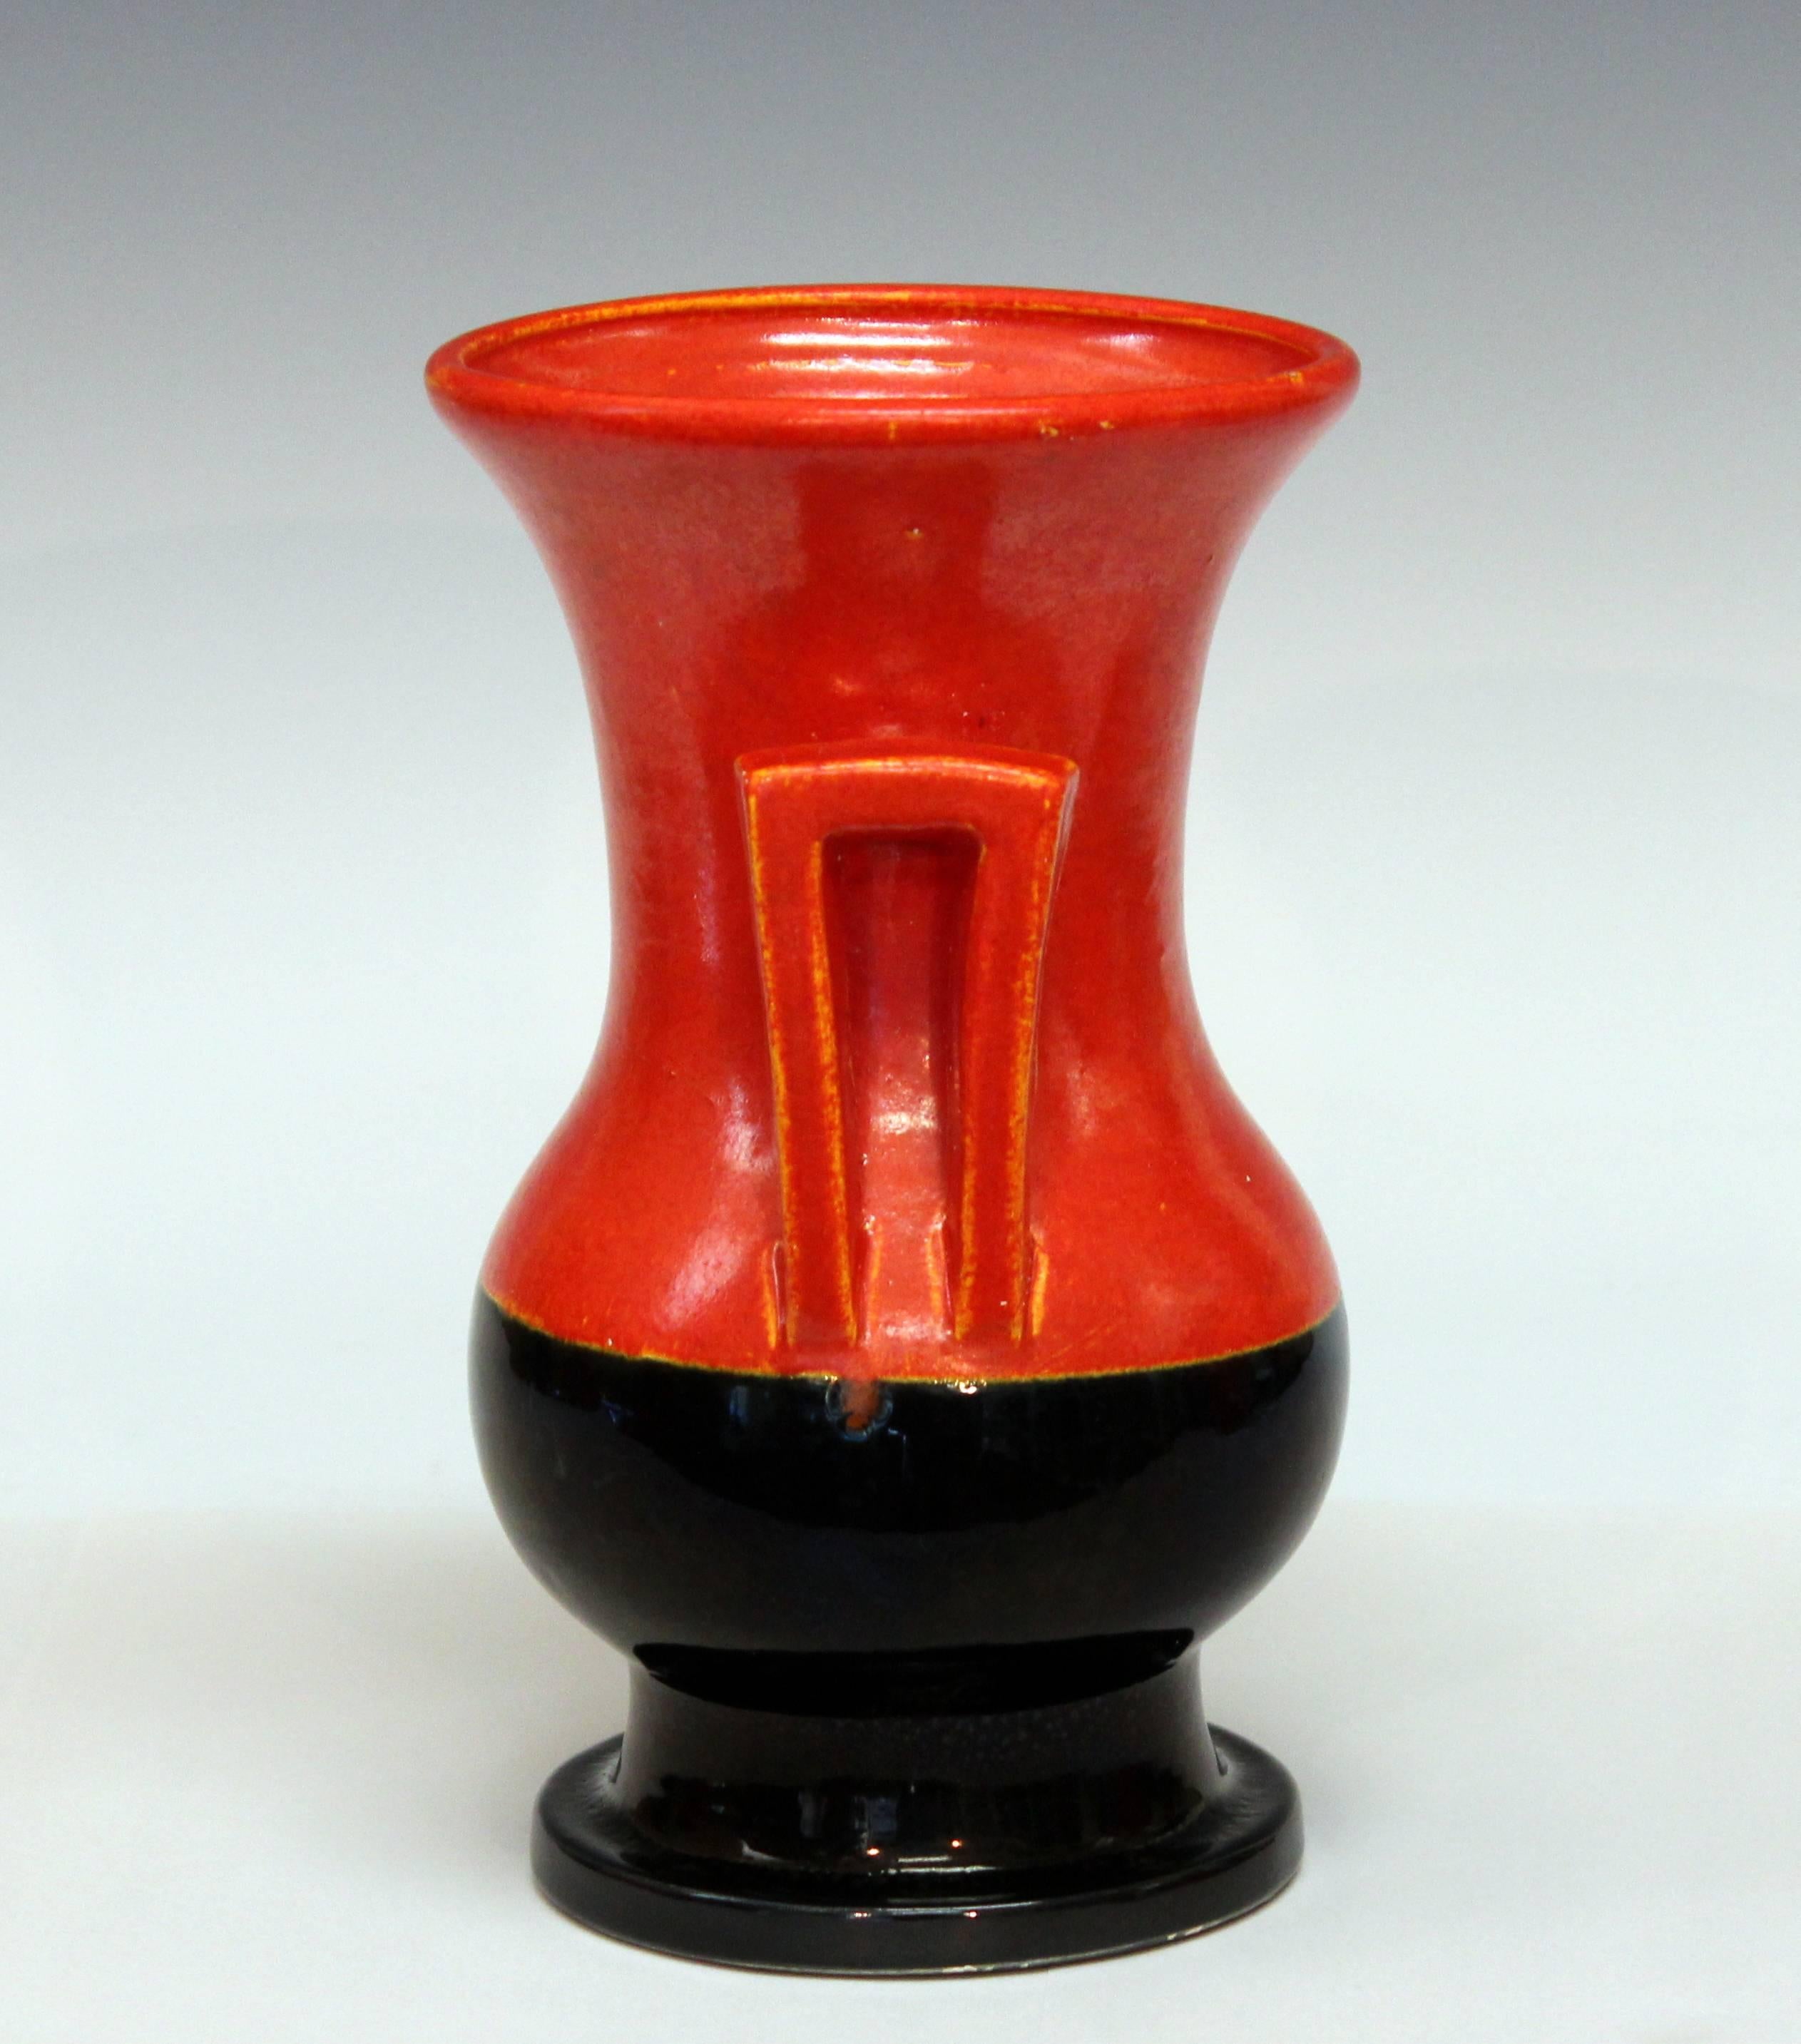 Turned Awaji Pottery Chrome Orange and Black Art Deco Buttress Handled Vase